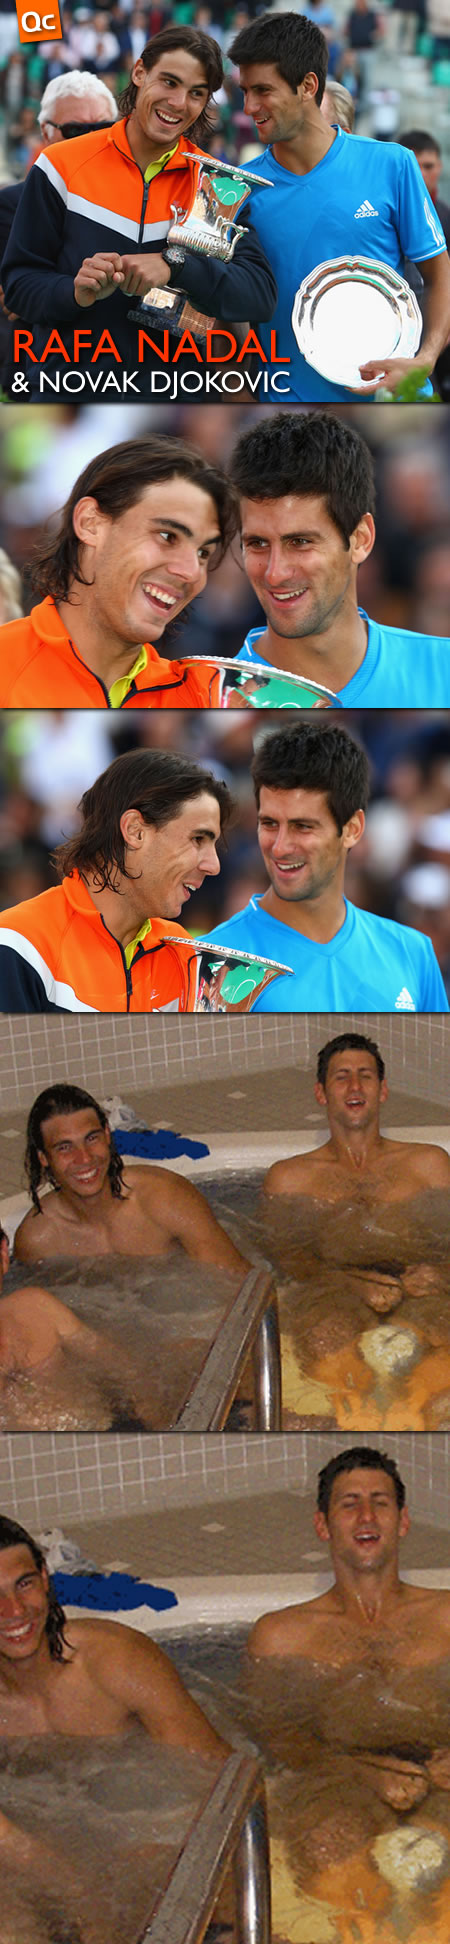 Rafael Nadal y Novak Djokovic  en el Jacuzi